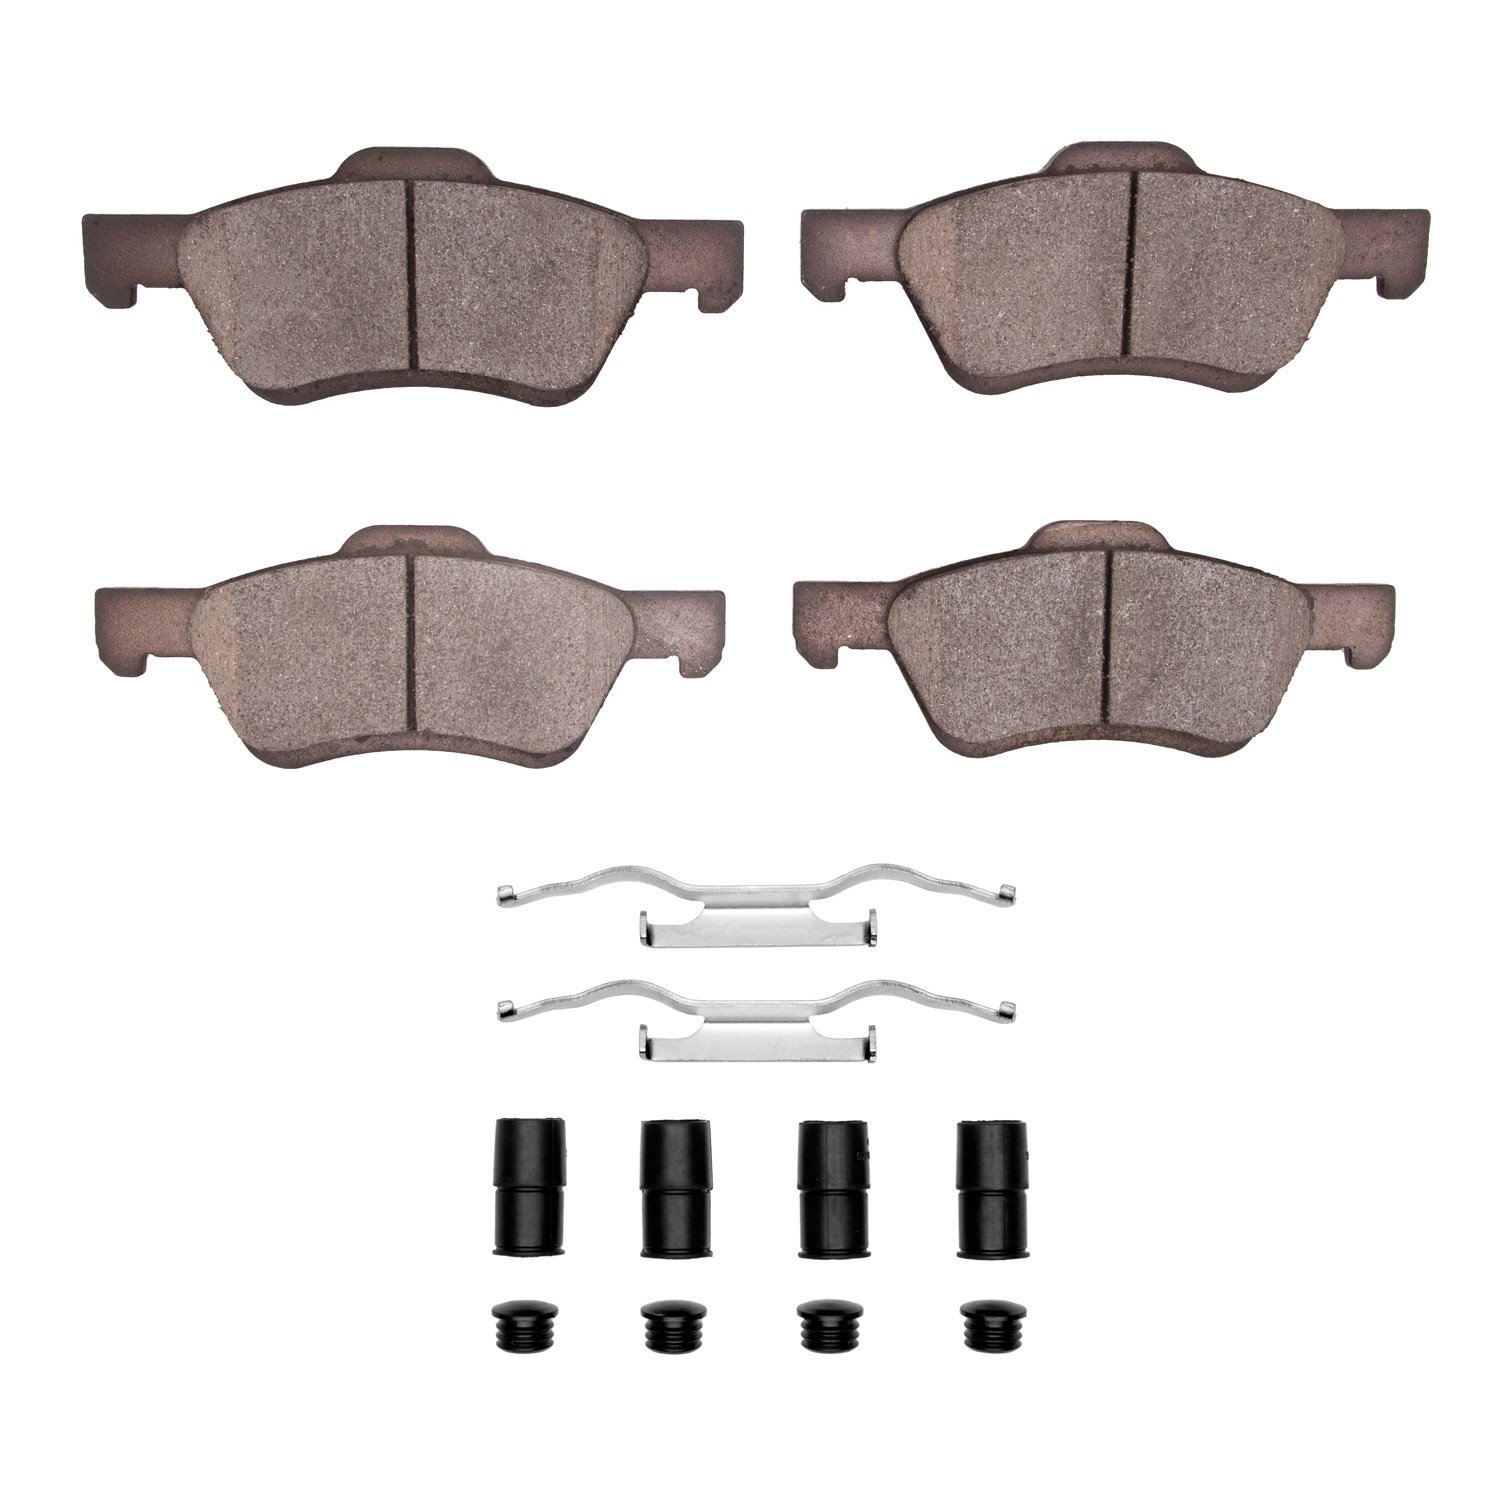 1310-1047-22 3000-Series Ceramic Brake Pads & Hardware Kit, 2009-2012 Ford/Lincoln/Mercury/Mazda, Position: Front